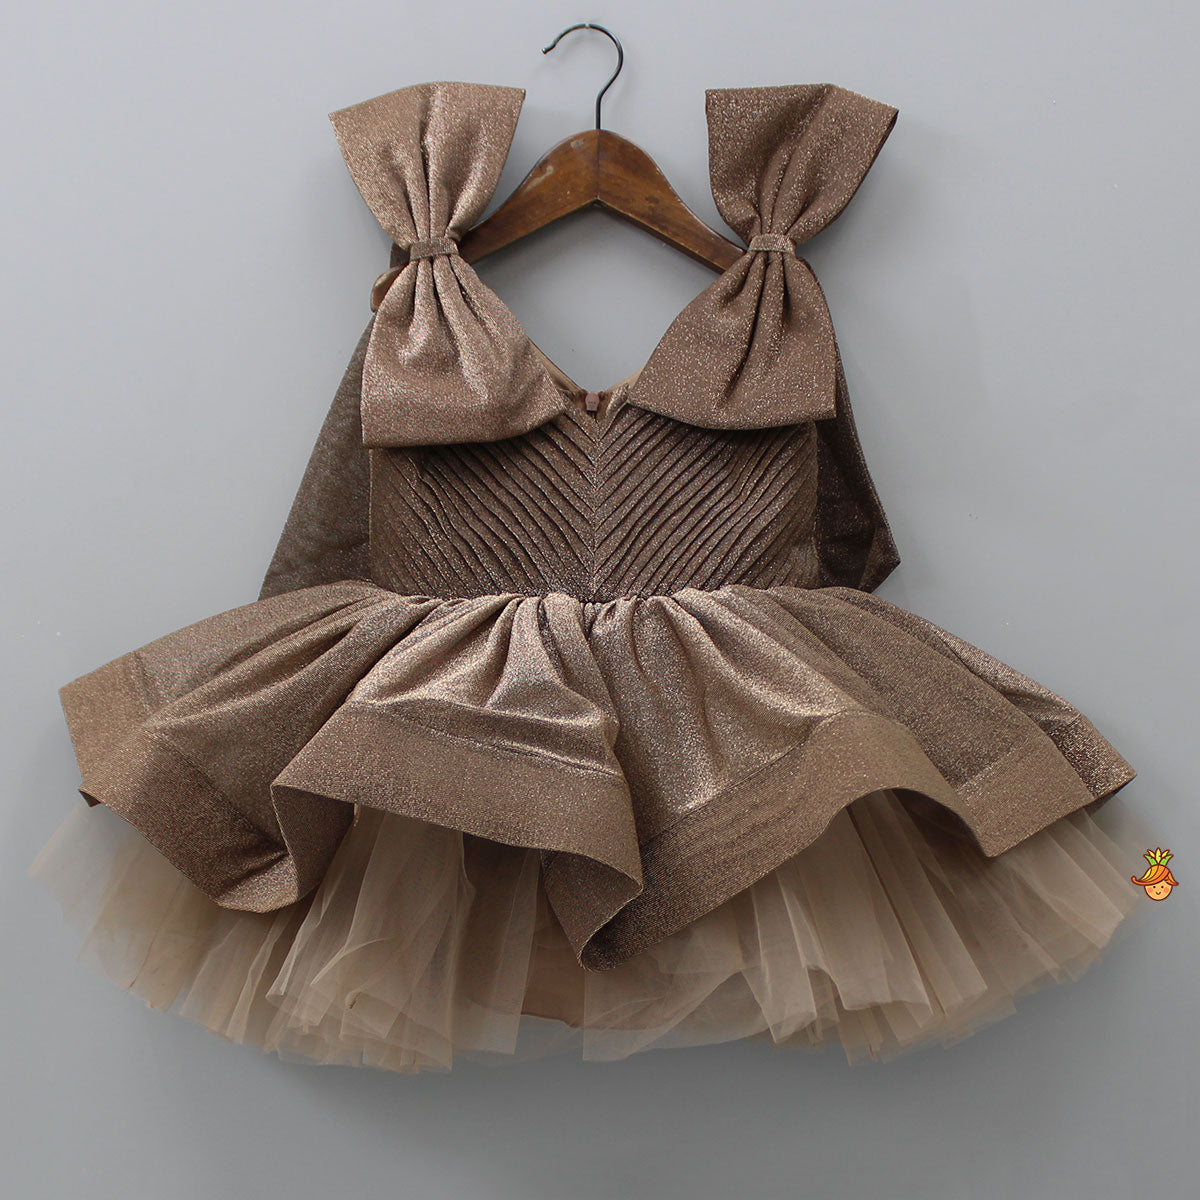 Bows Enhanced Shimmery Brown Dress